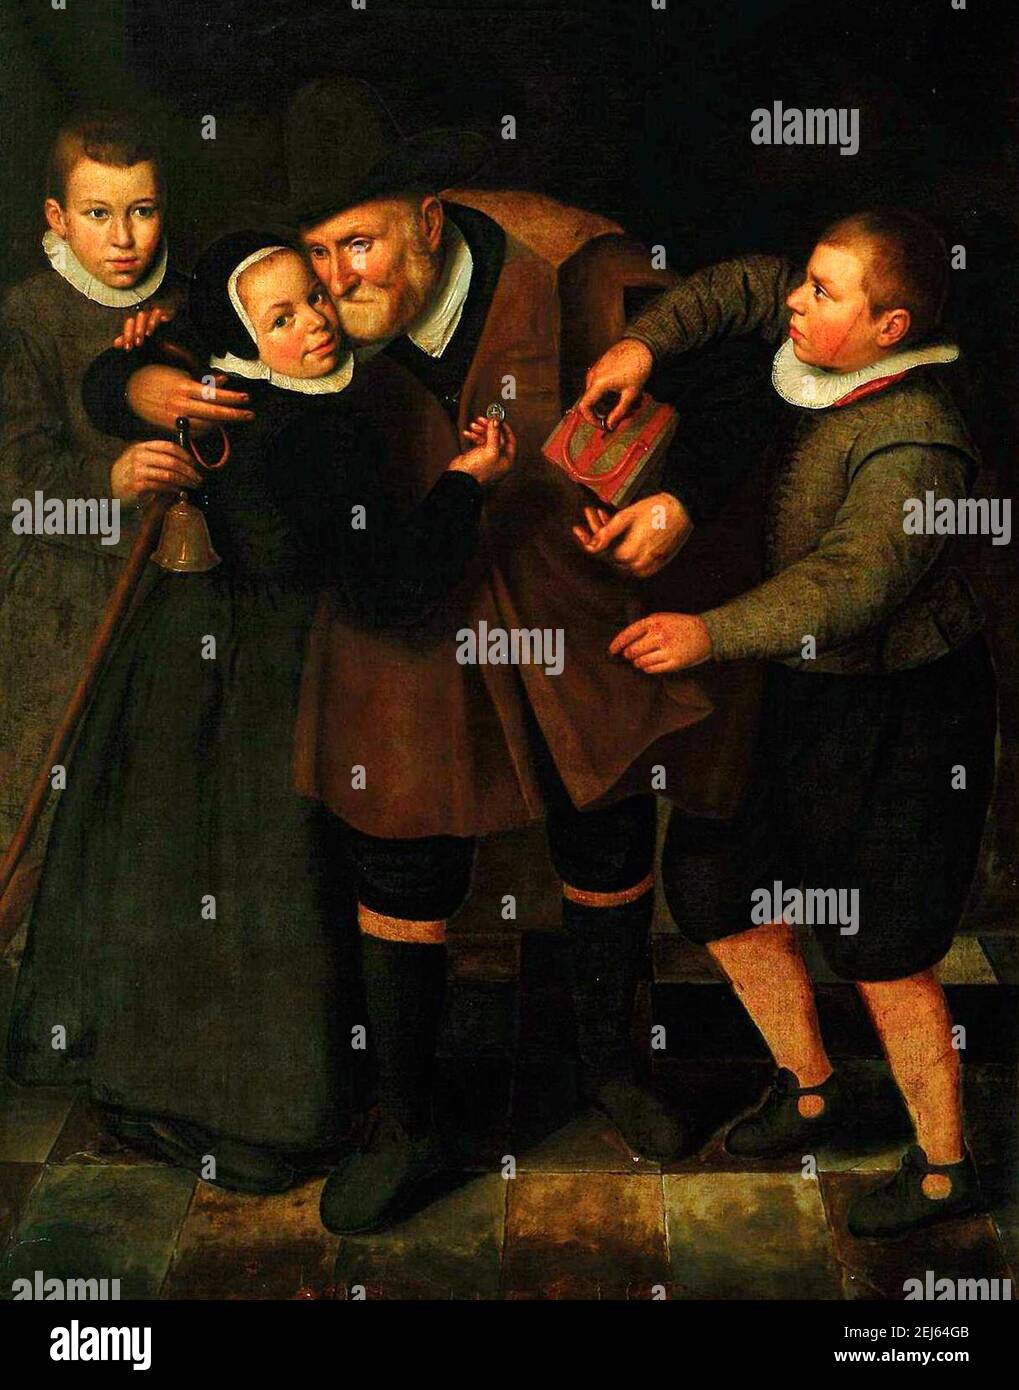 Old man grateful for alms - Cornelis Engelsz, circa 1625 Stock Photo